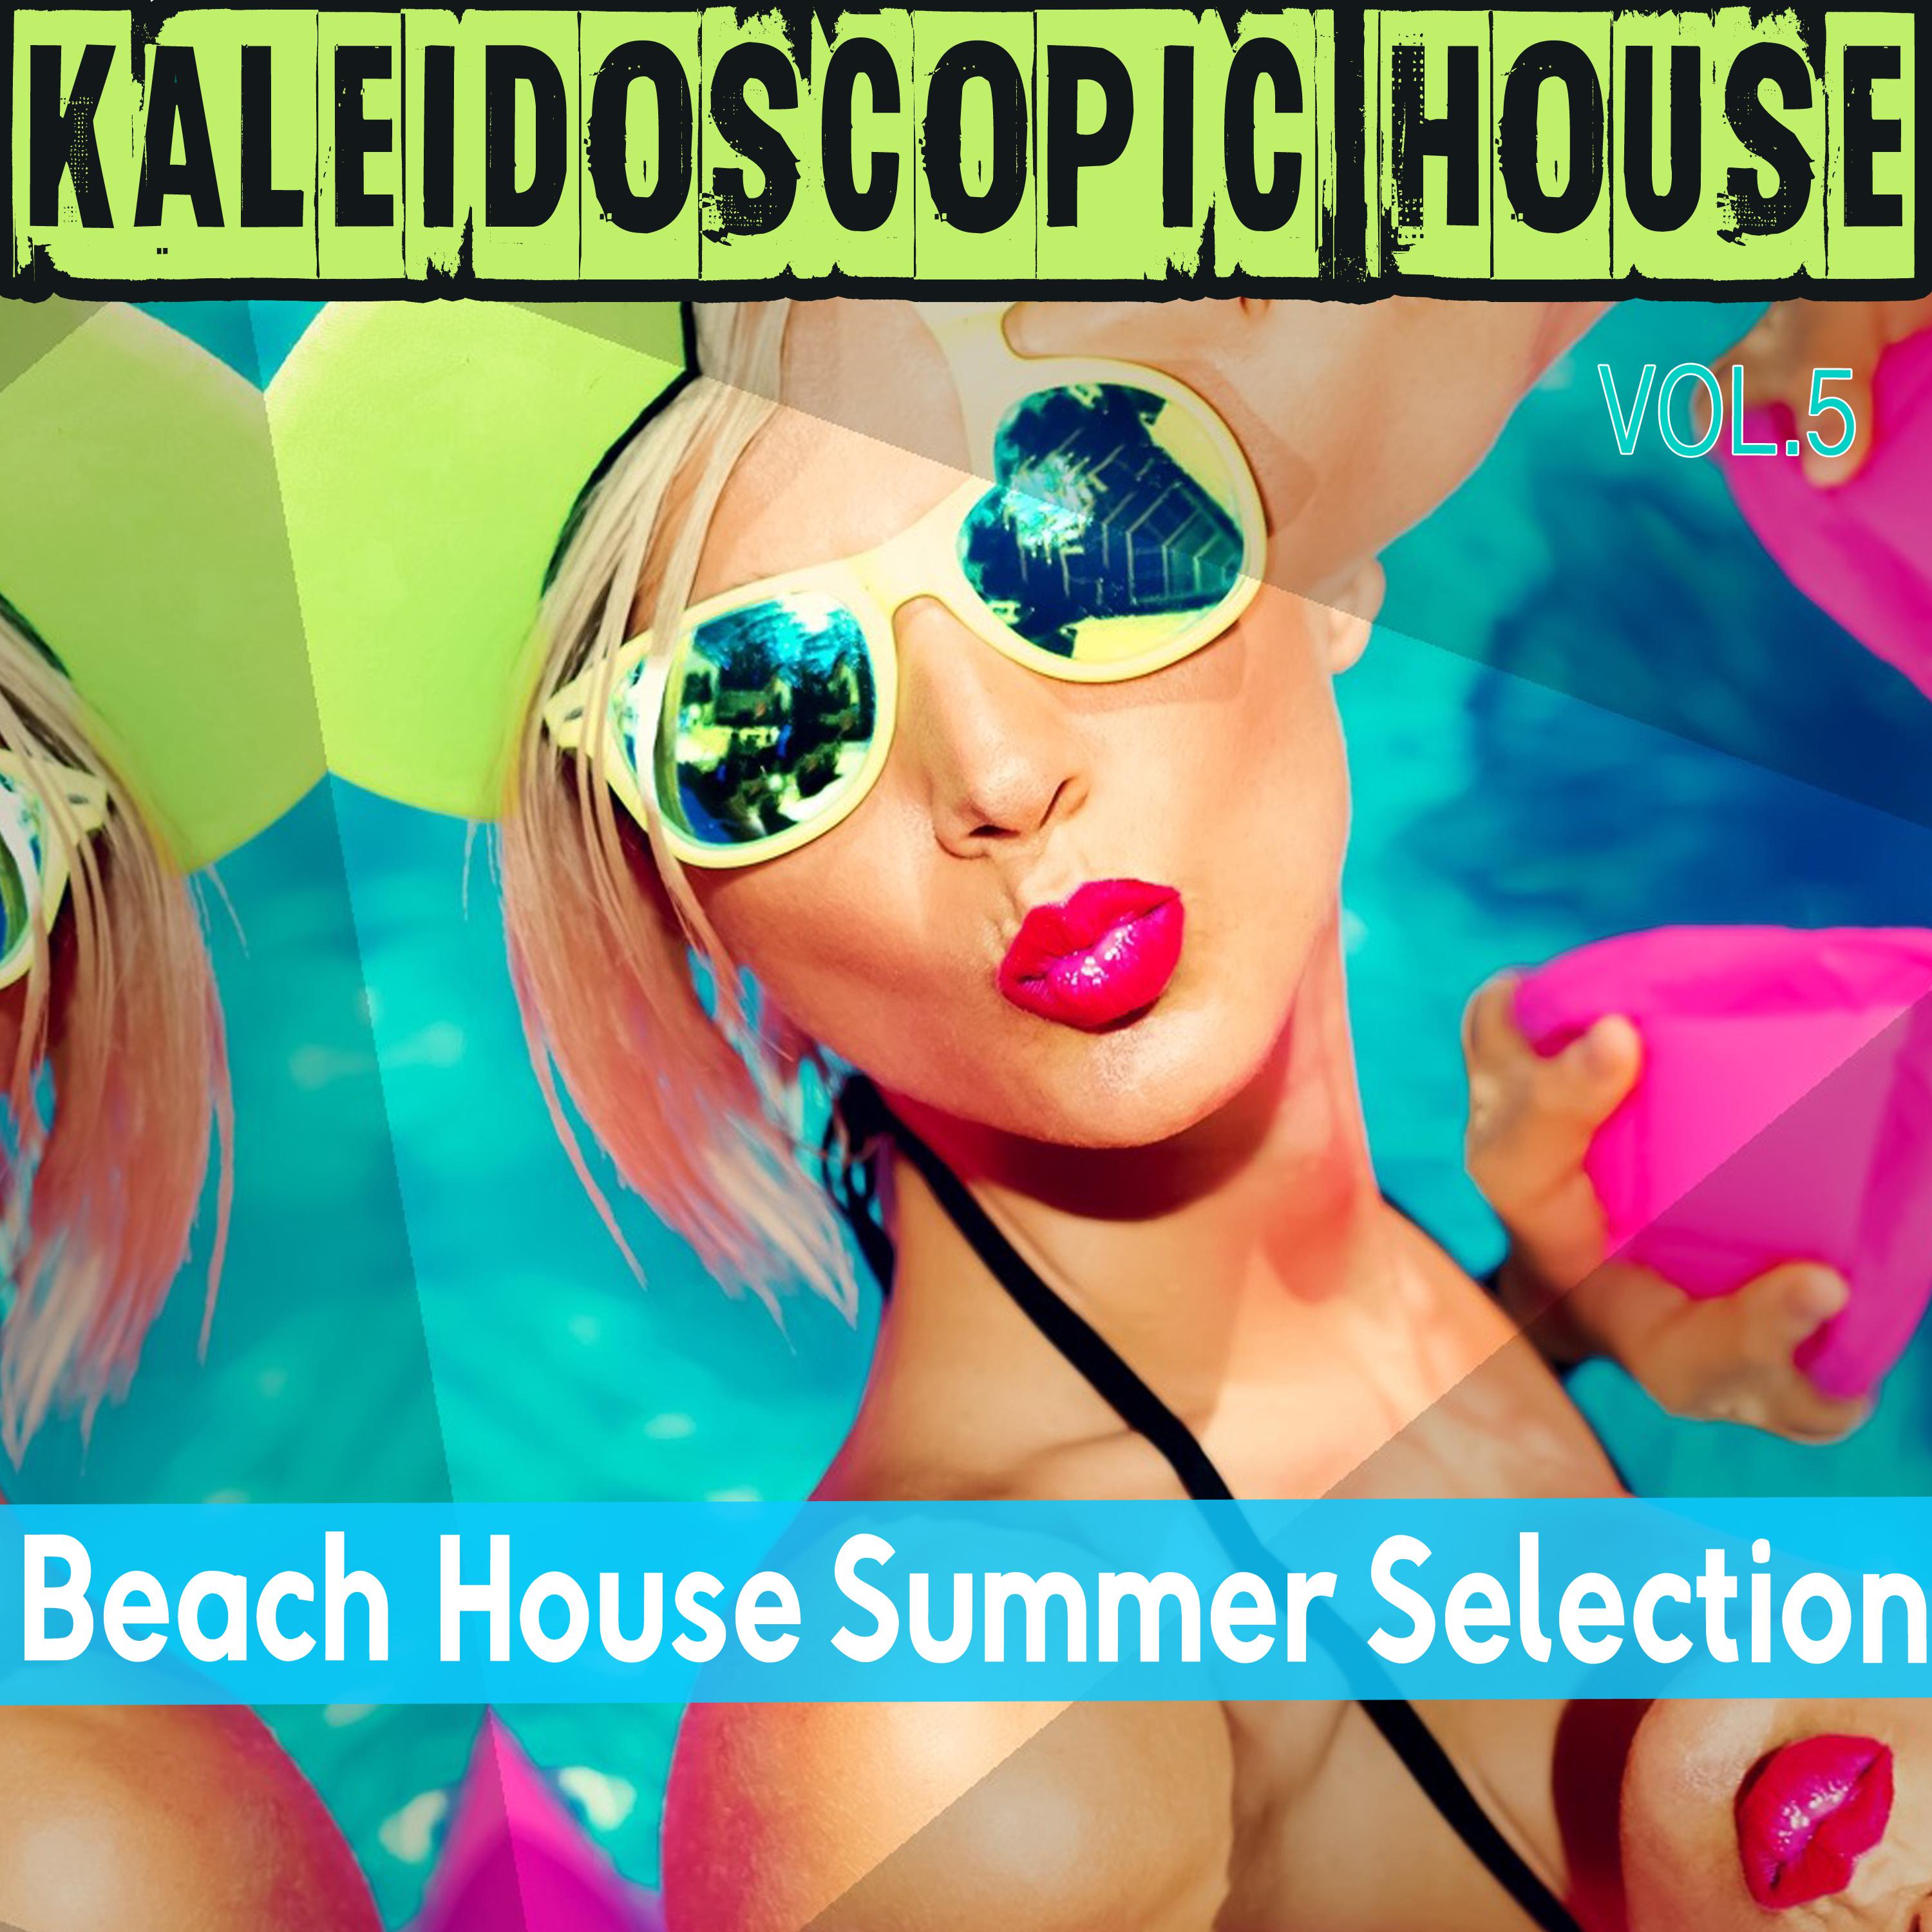 Kaleidoscopic House, Vol. 5 - Beach House Summer Selection